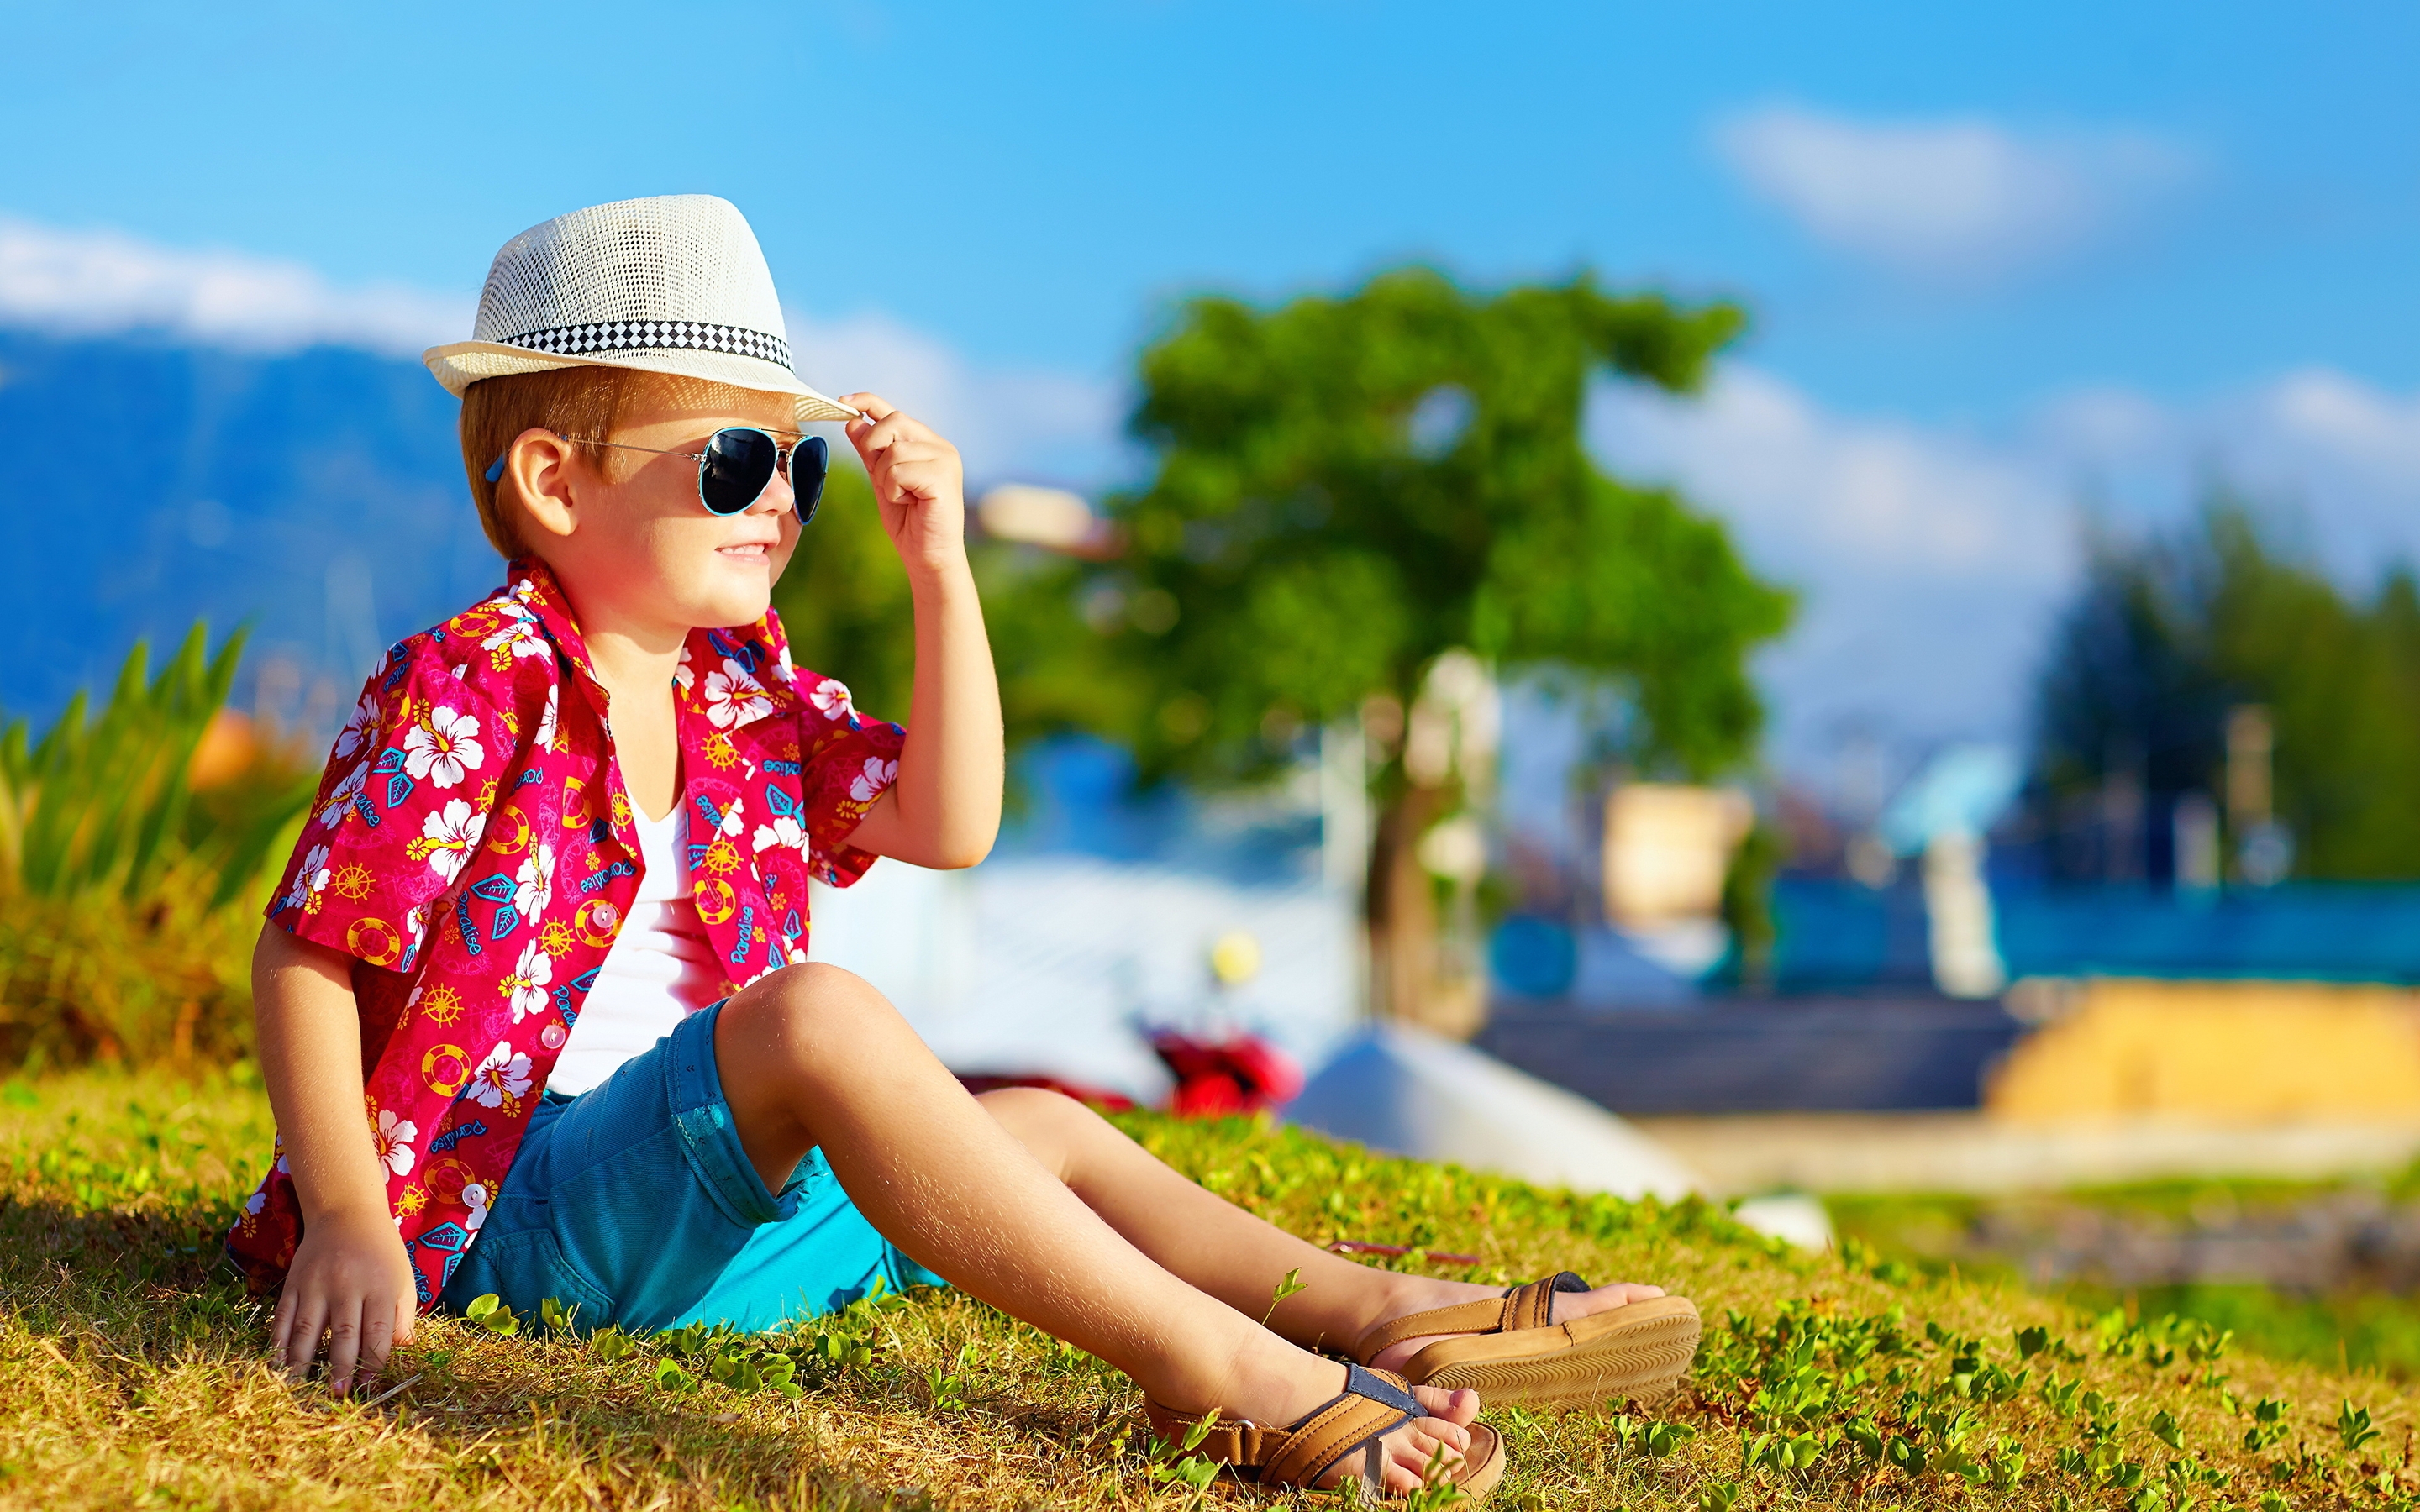 Image: Boy, sitting, sunglasses, hat, summer, grass, sun rays